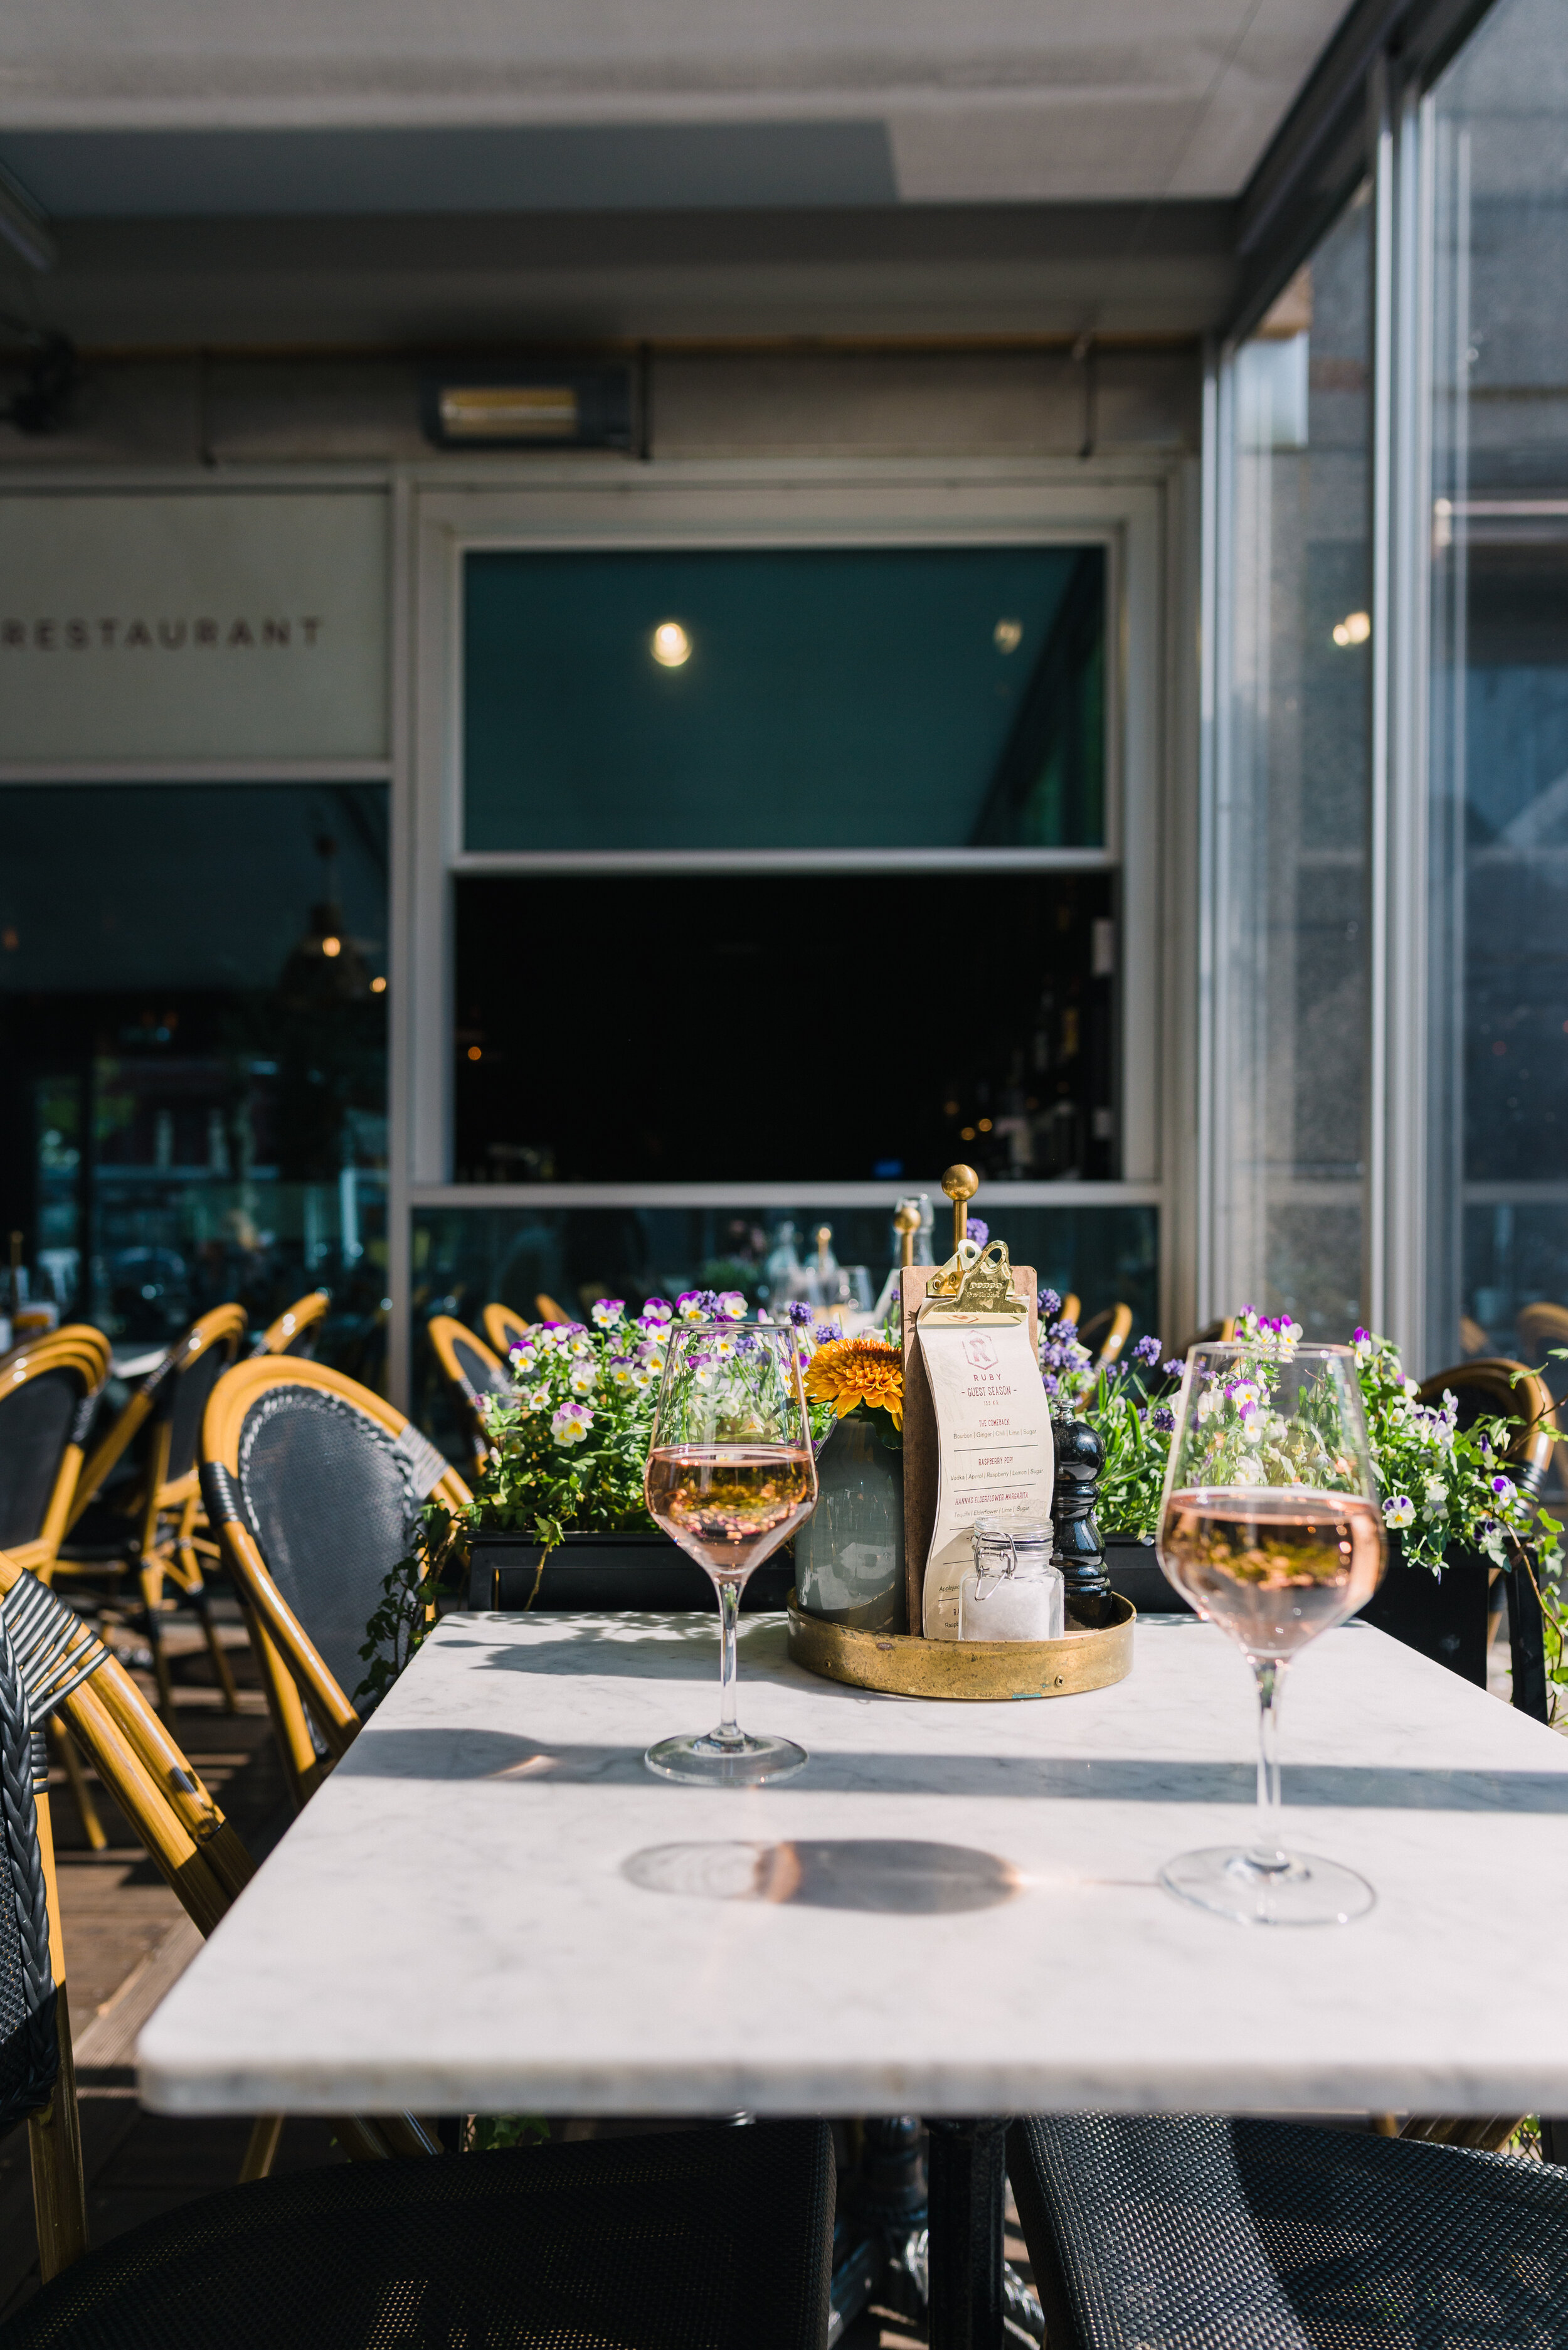 Scandic-Rubinen-restaurant-terrace-wineglass.jpg